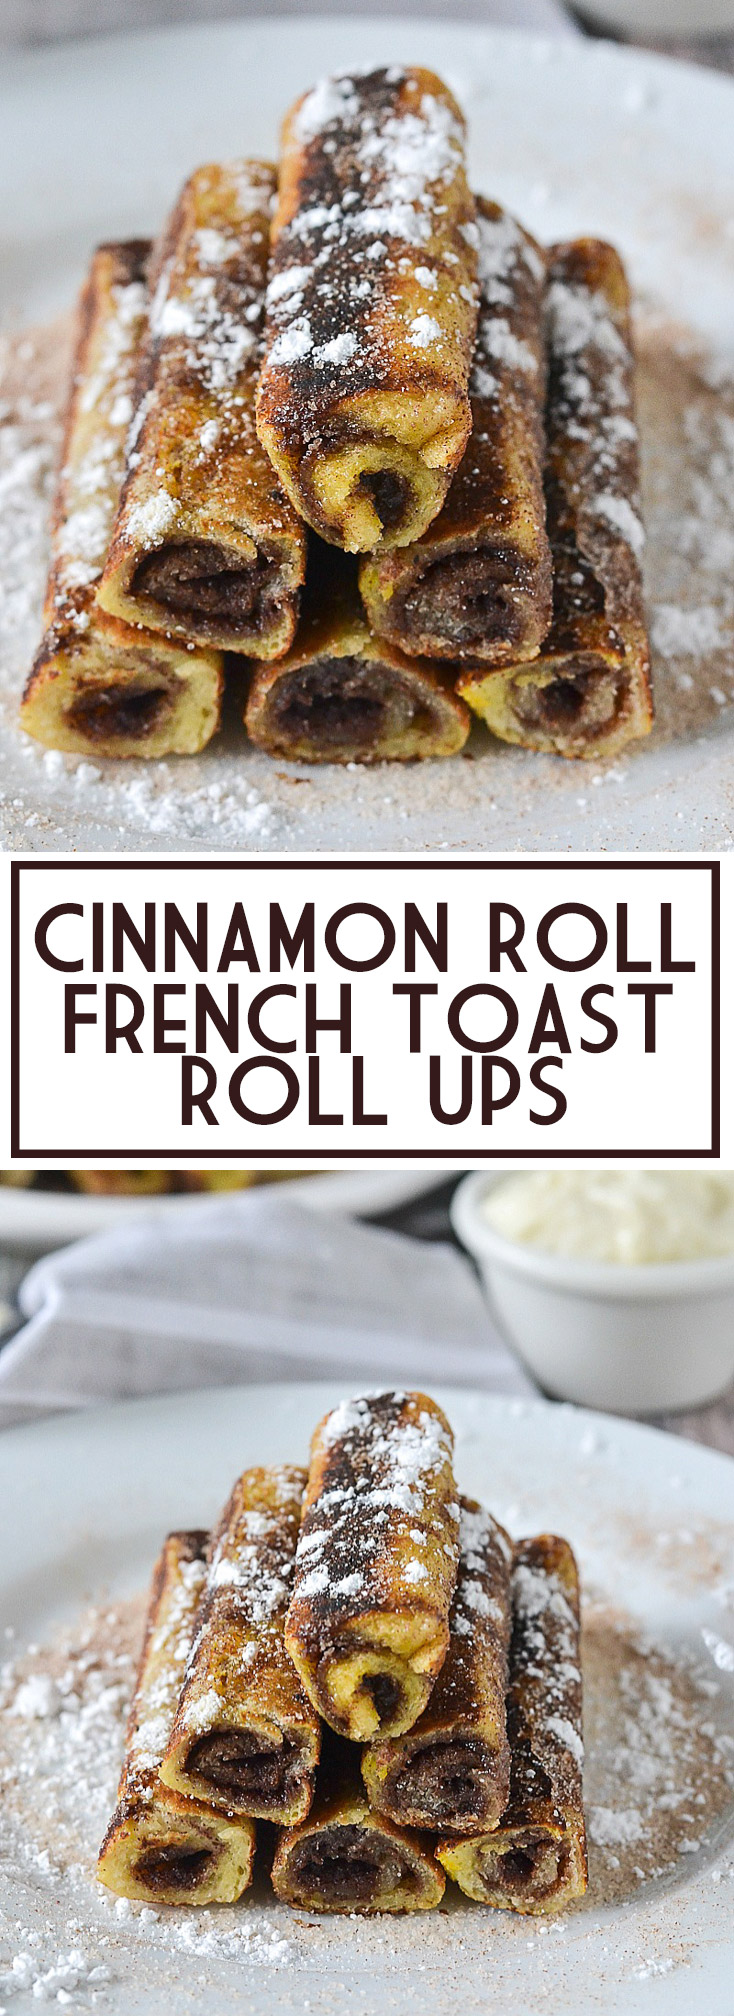 Cinnamon Roll French Toast Roll Ups | www.motherthyme.com